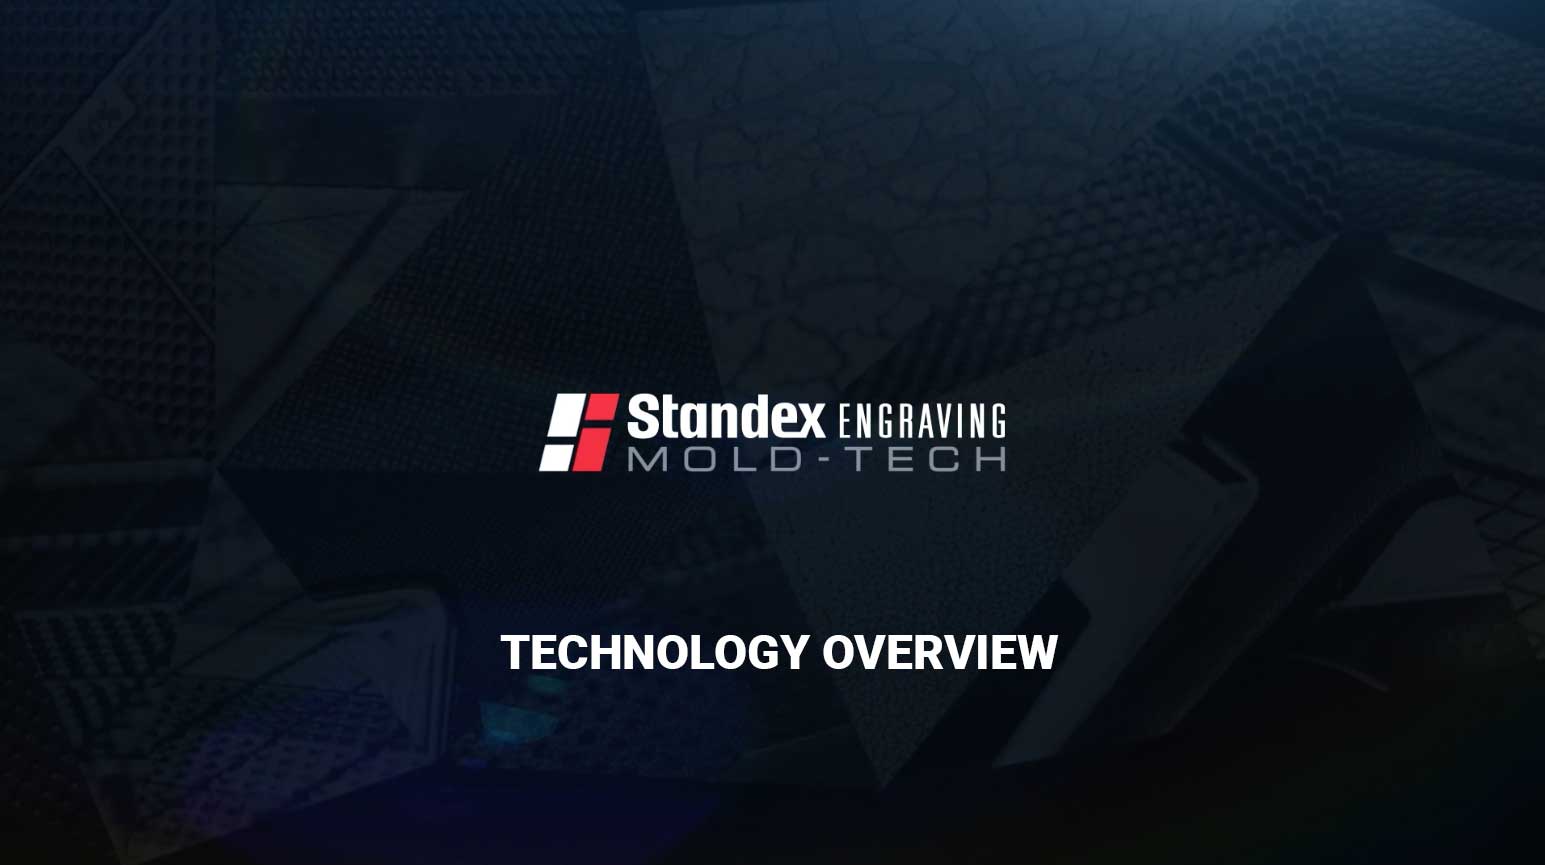 Standex technology